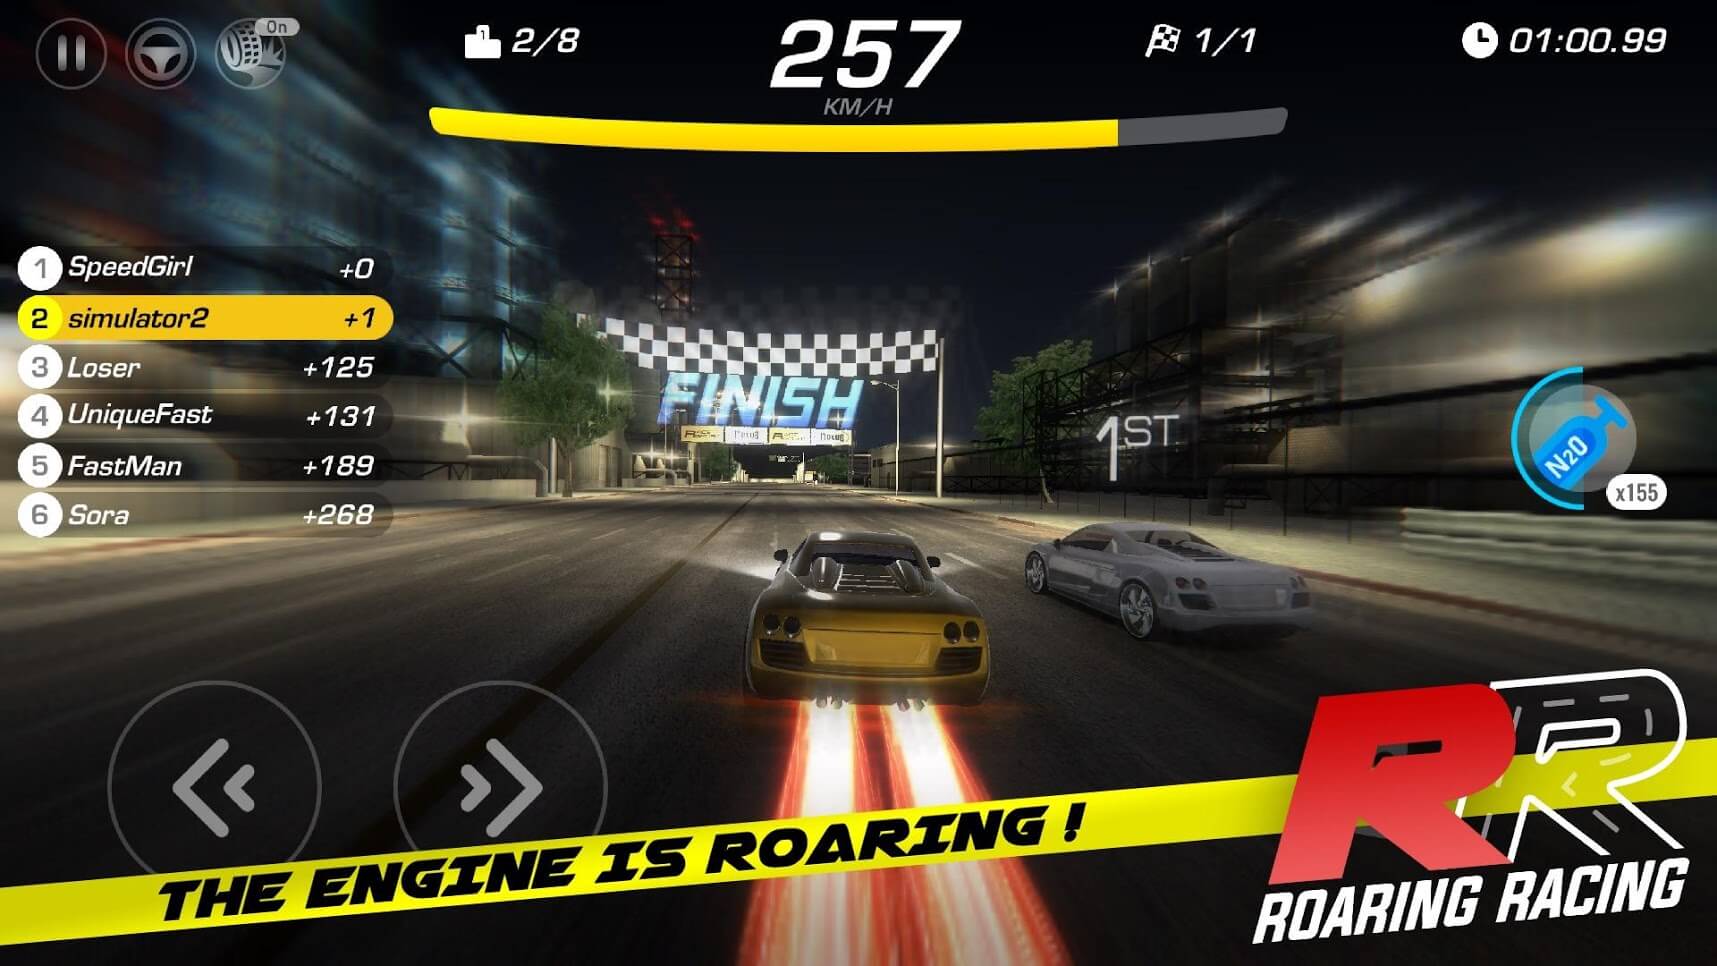 Roaring-Racing-7.jpg